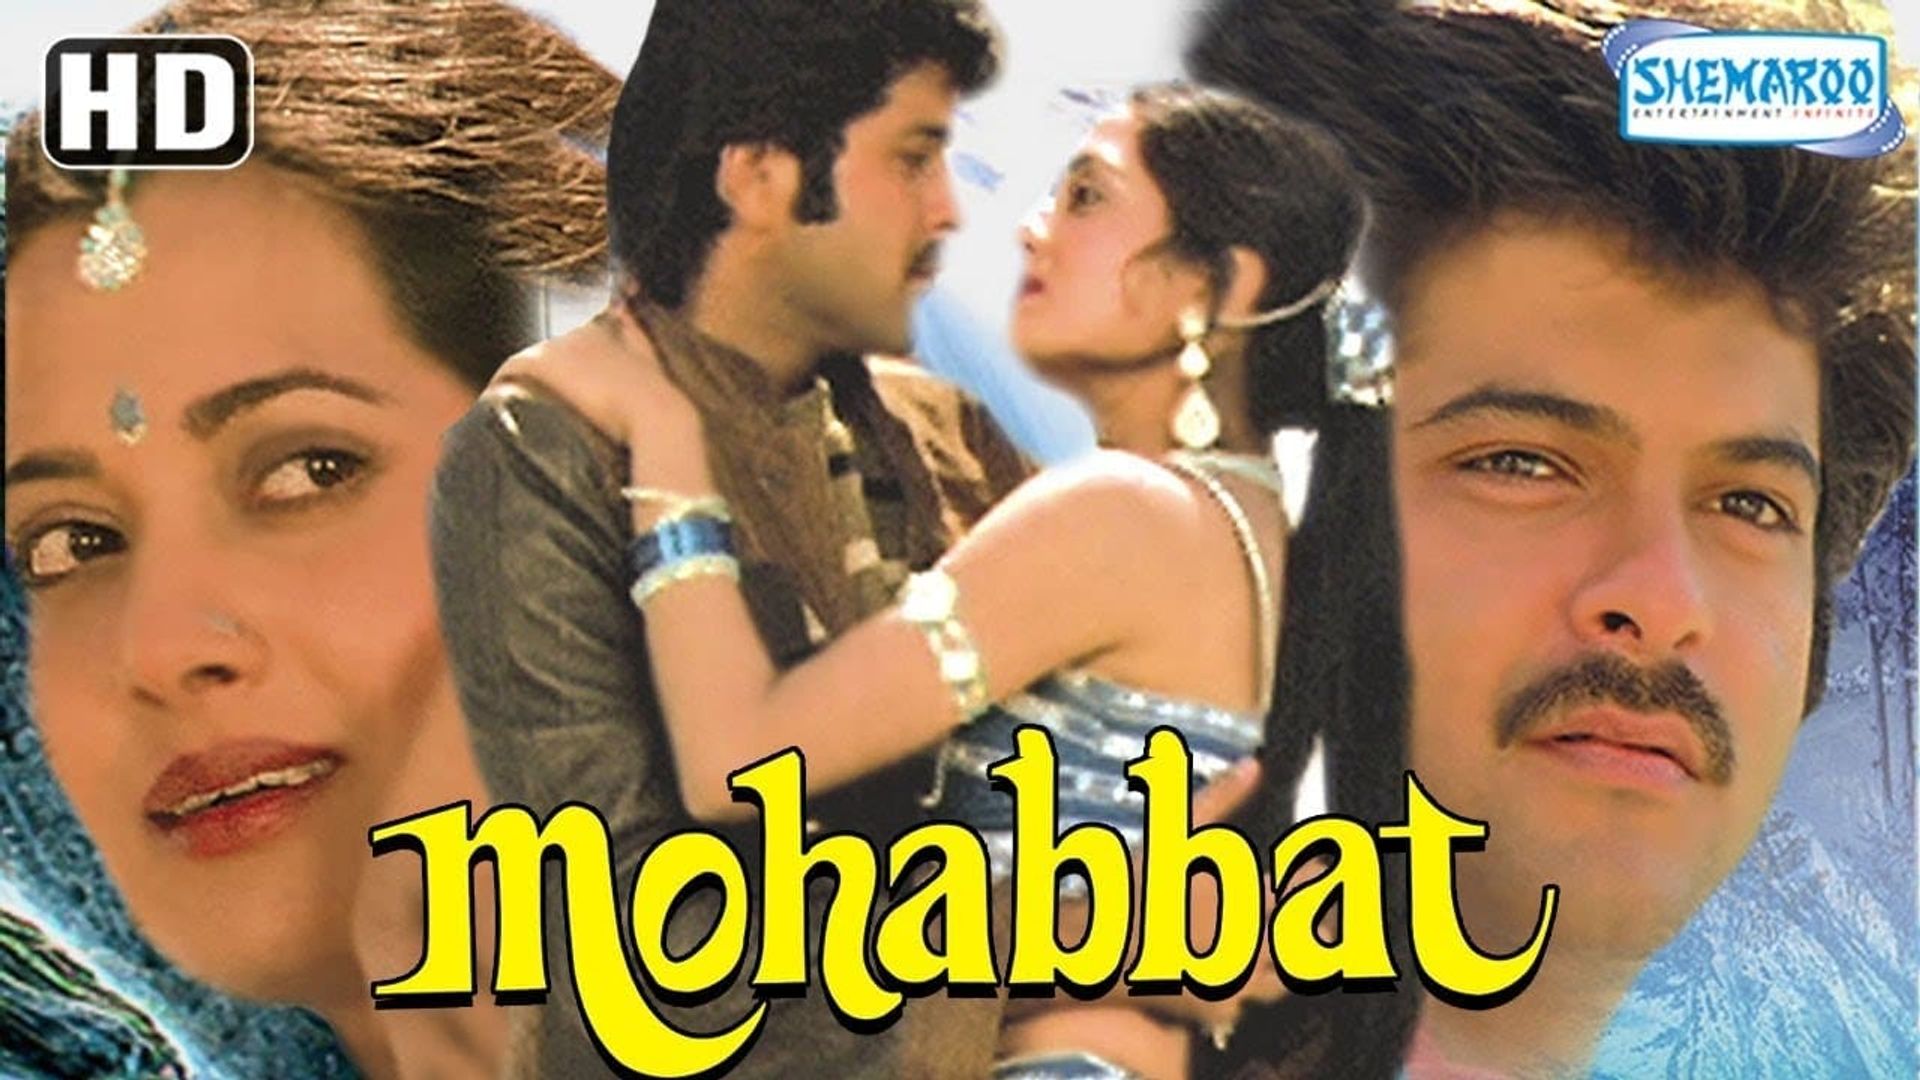 Mohabbat background